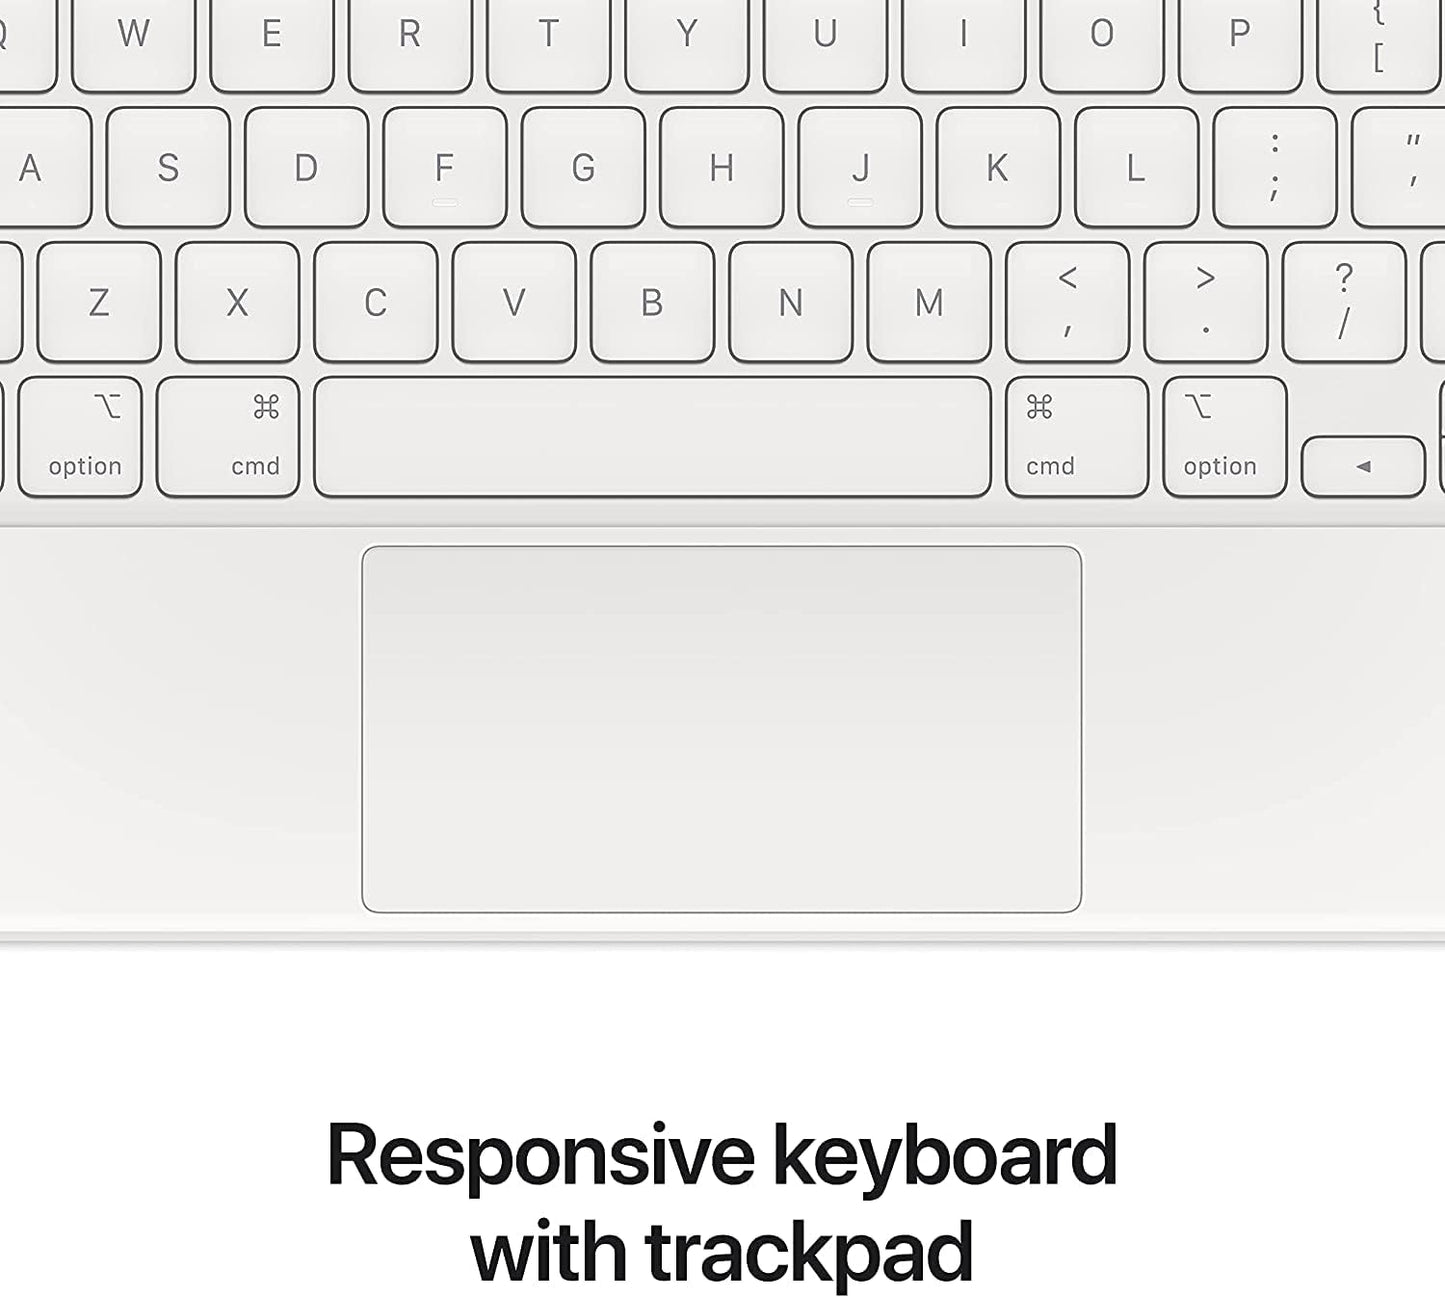 Apple Magic Keyboard for 11-inch iPad Pro 3rd Gen & iPad Air 4th Gen - White